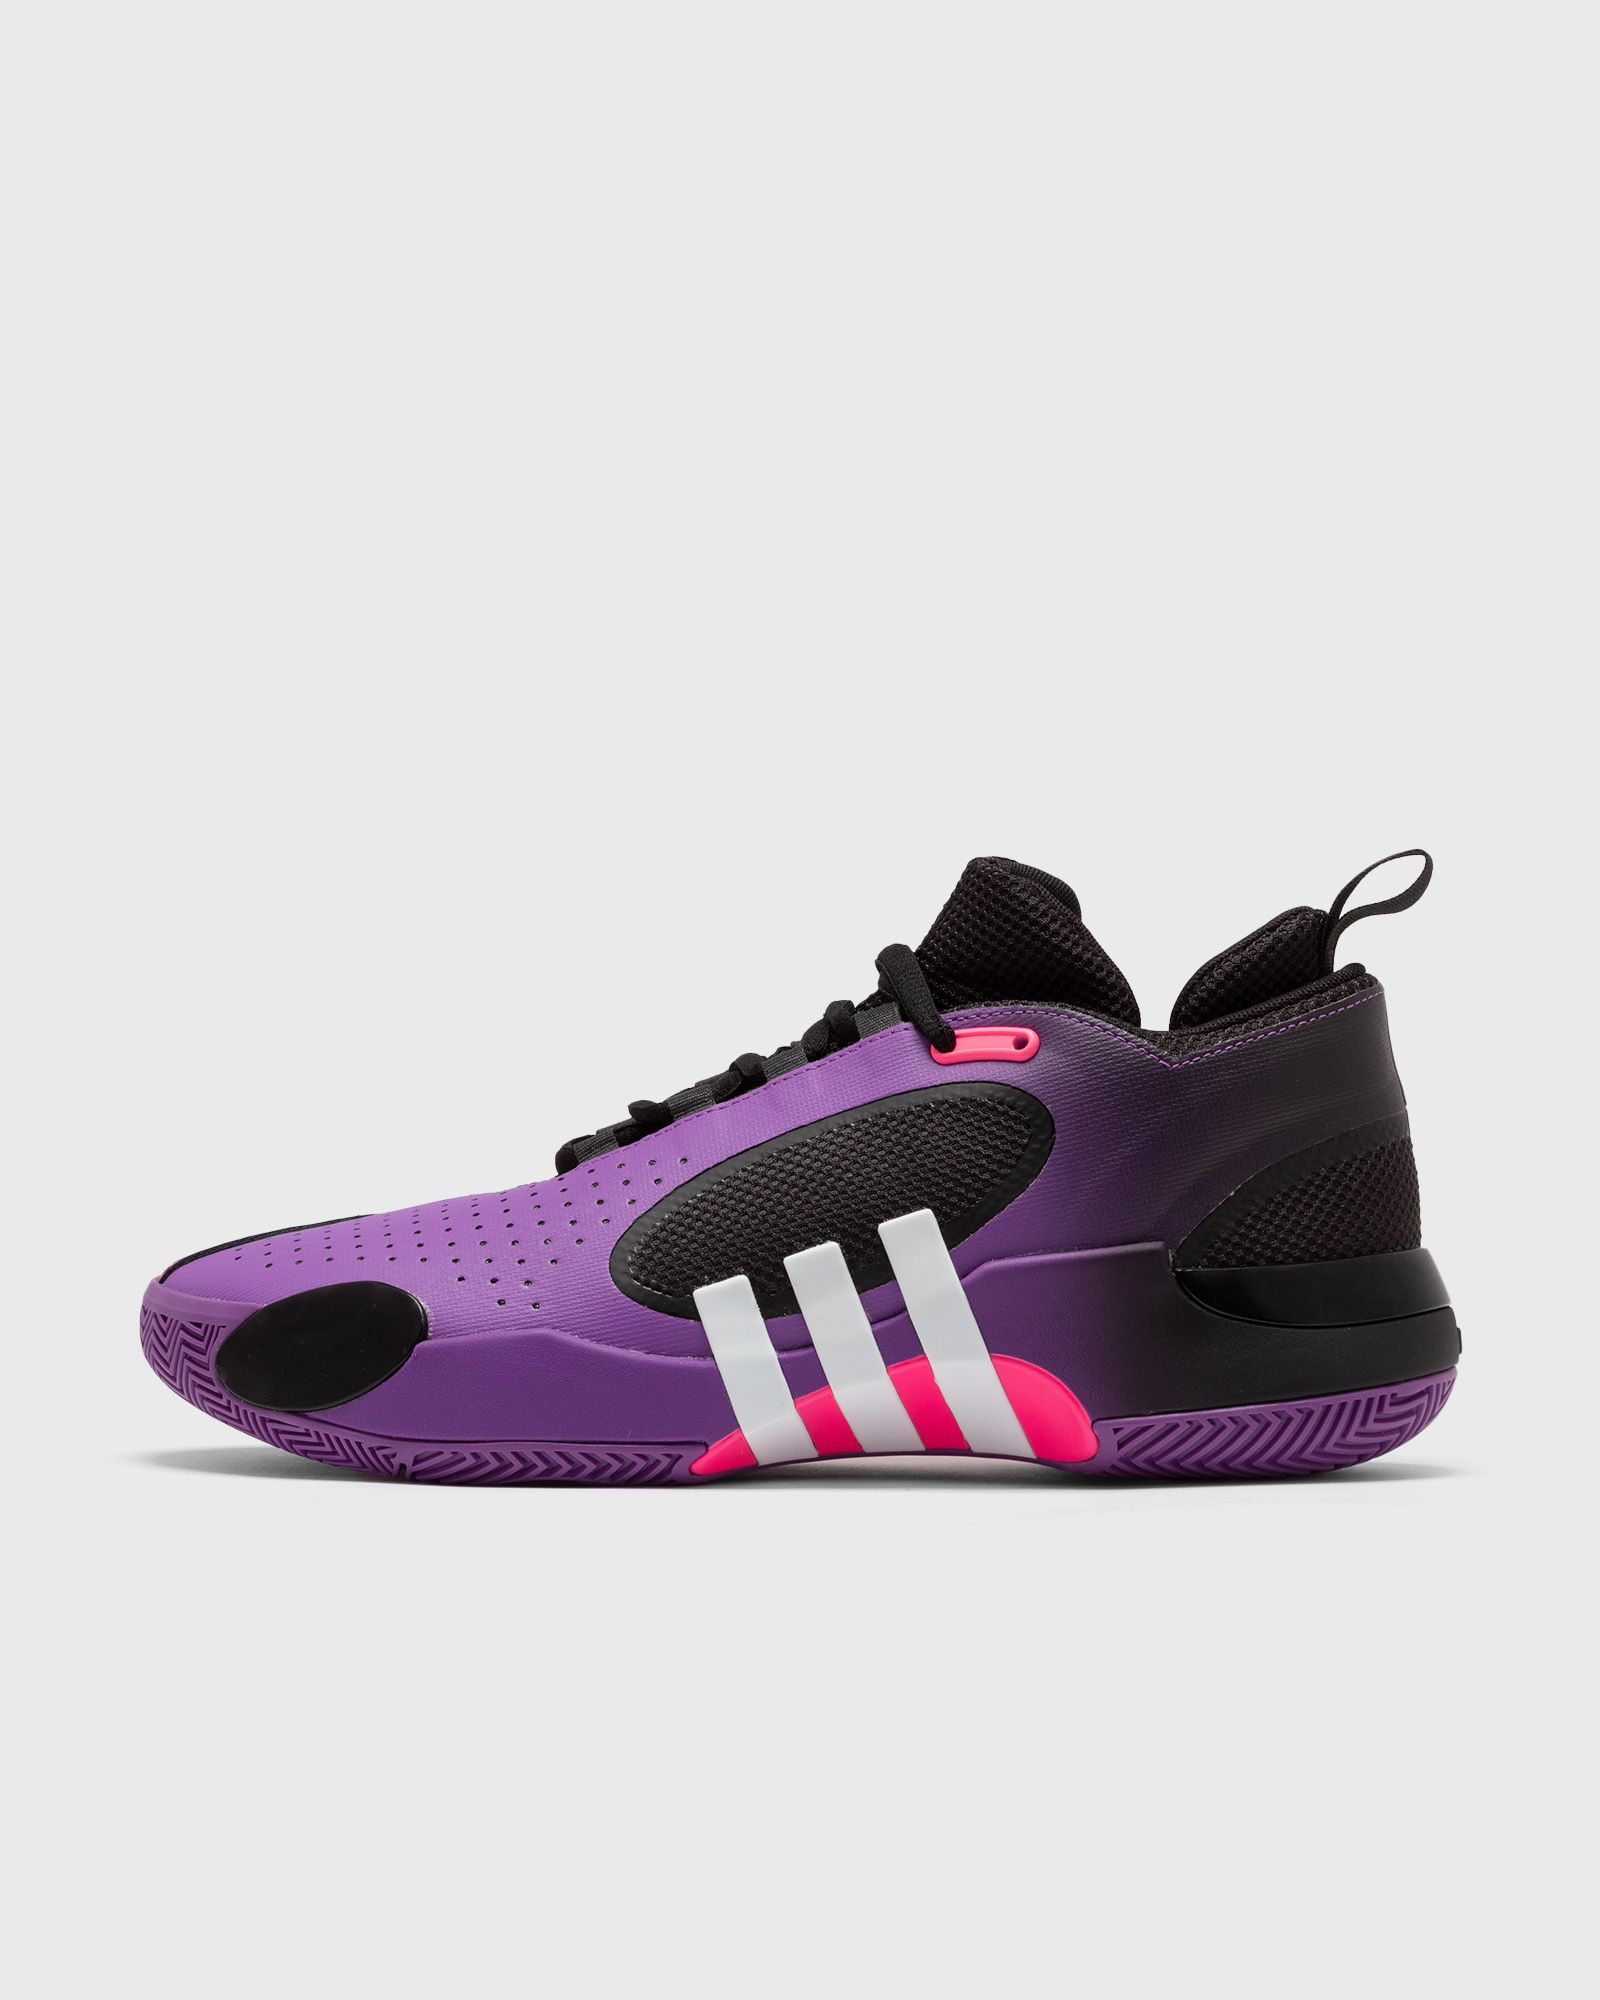 Adidas - d.o.n. issue 5 men basketball|high-& midtop black|purple in größe:40 2/3